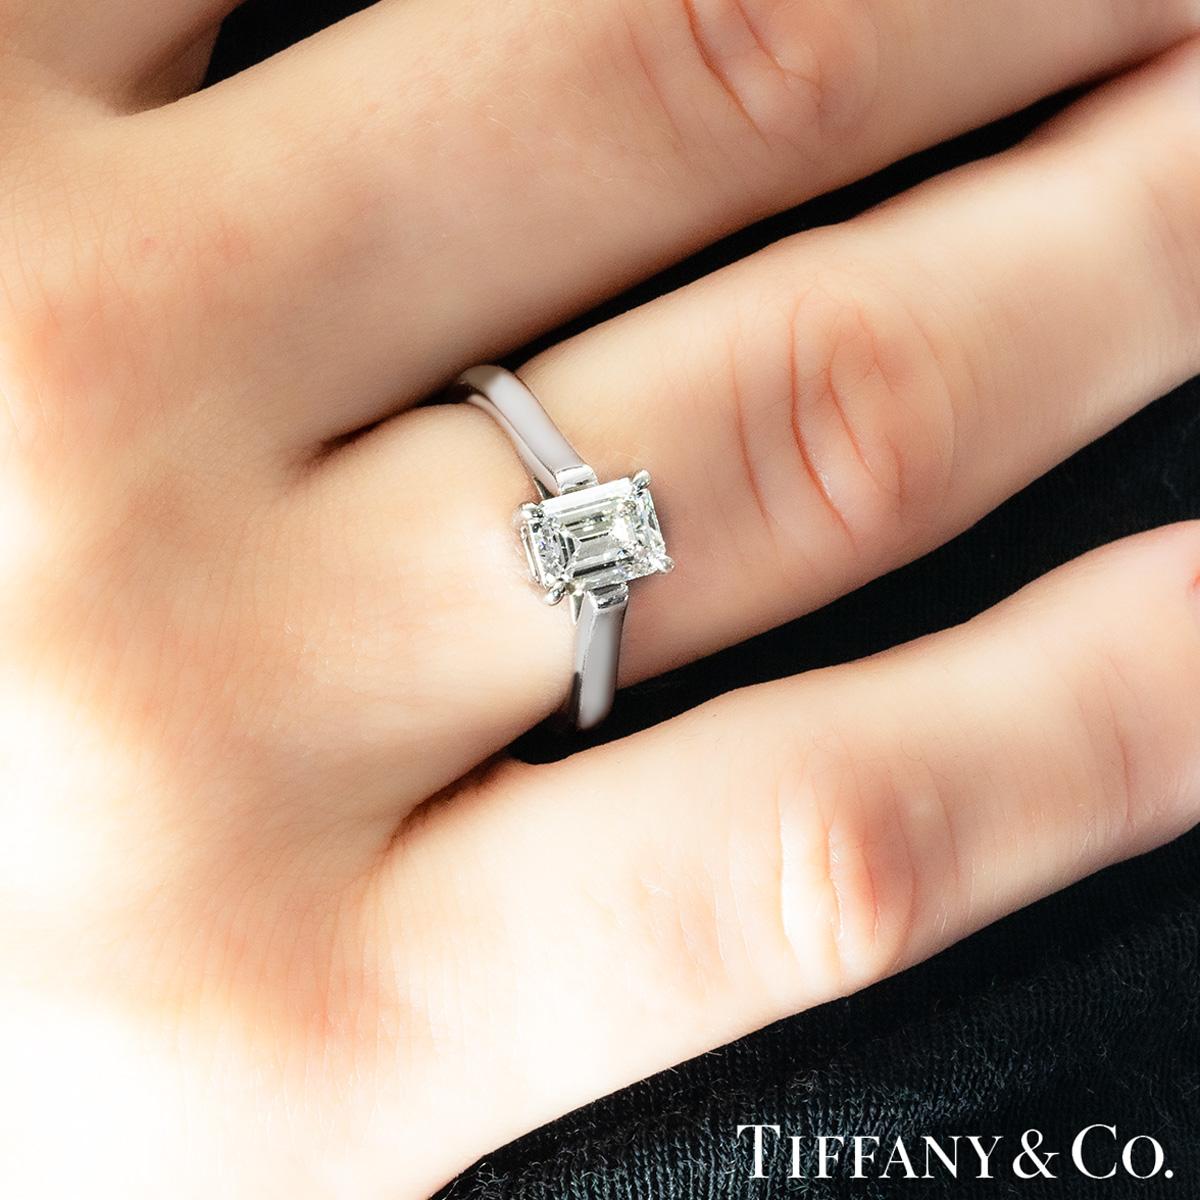 Tiffany & Co. Platinum Emerald Cut Diamond Engagement Ring 1.02ct I/VVS2 For Sale 1